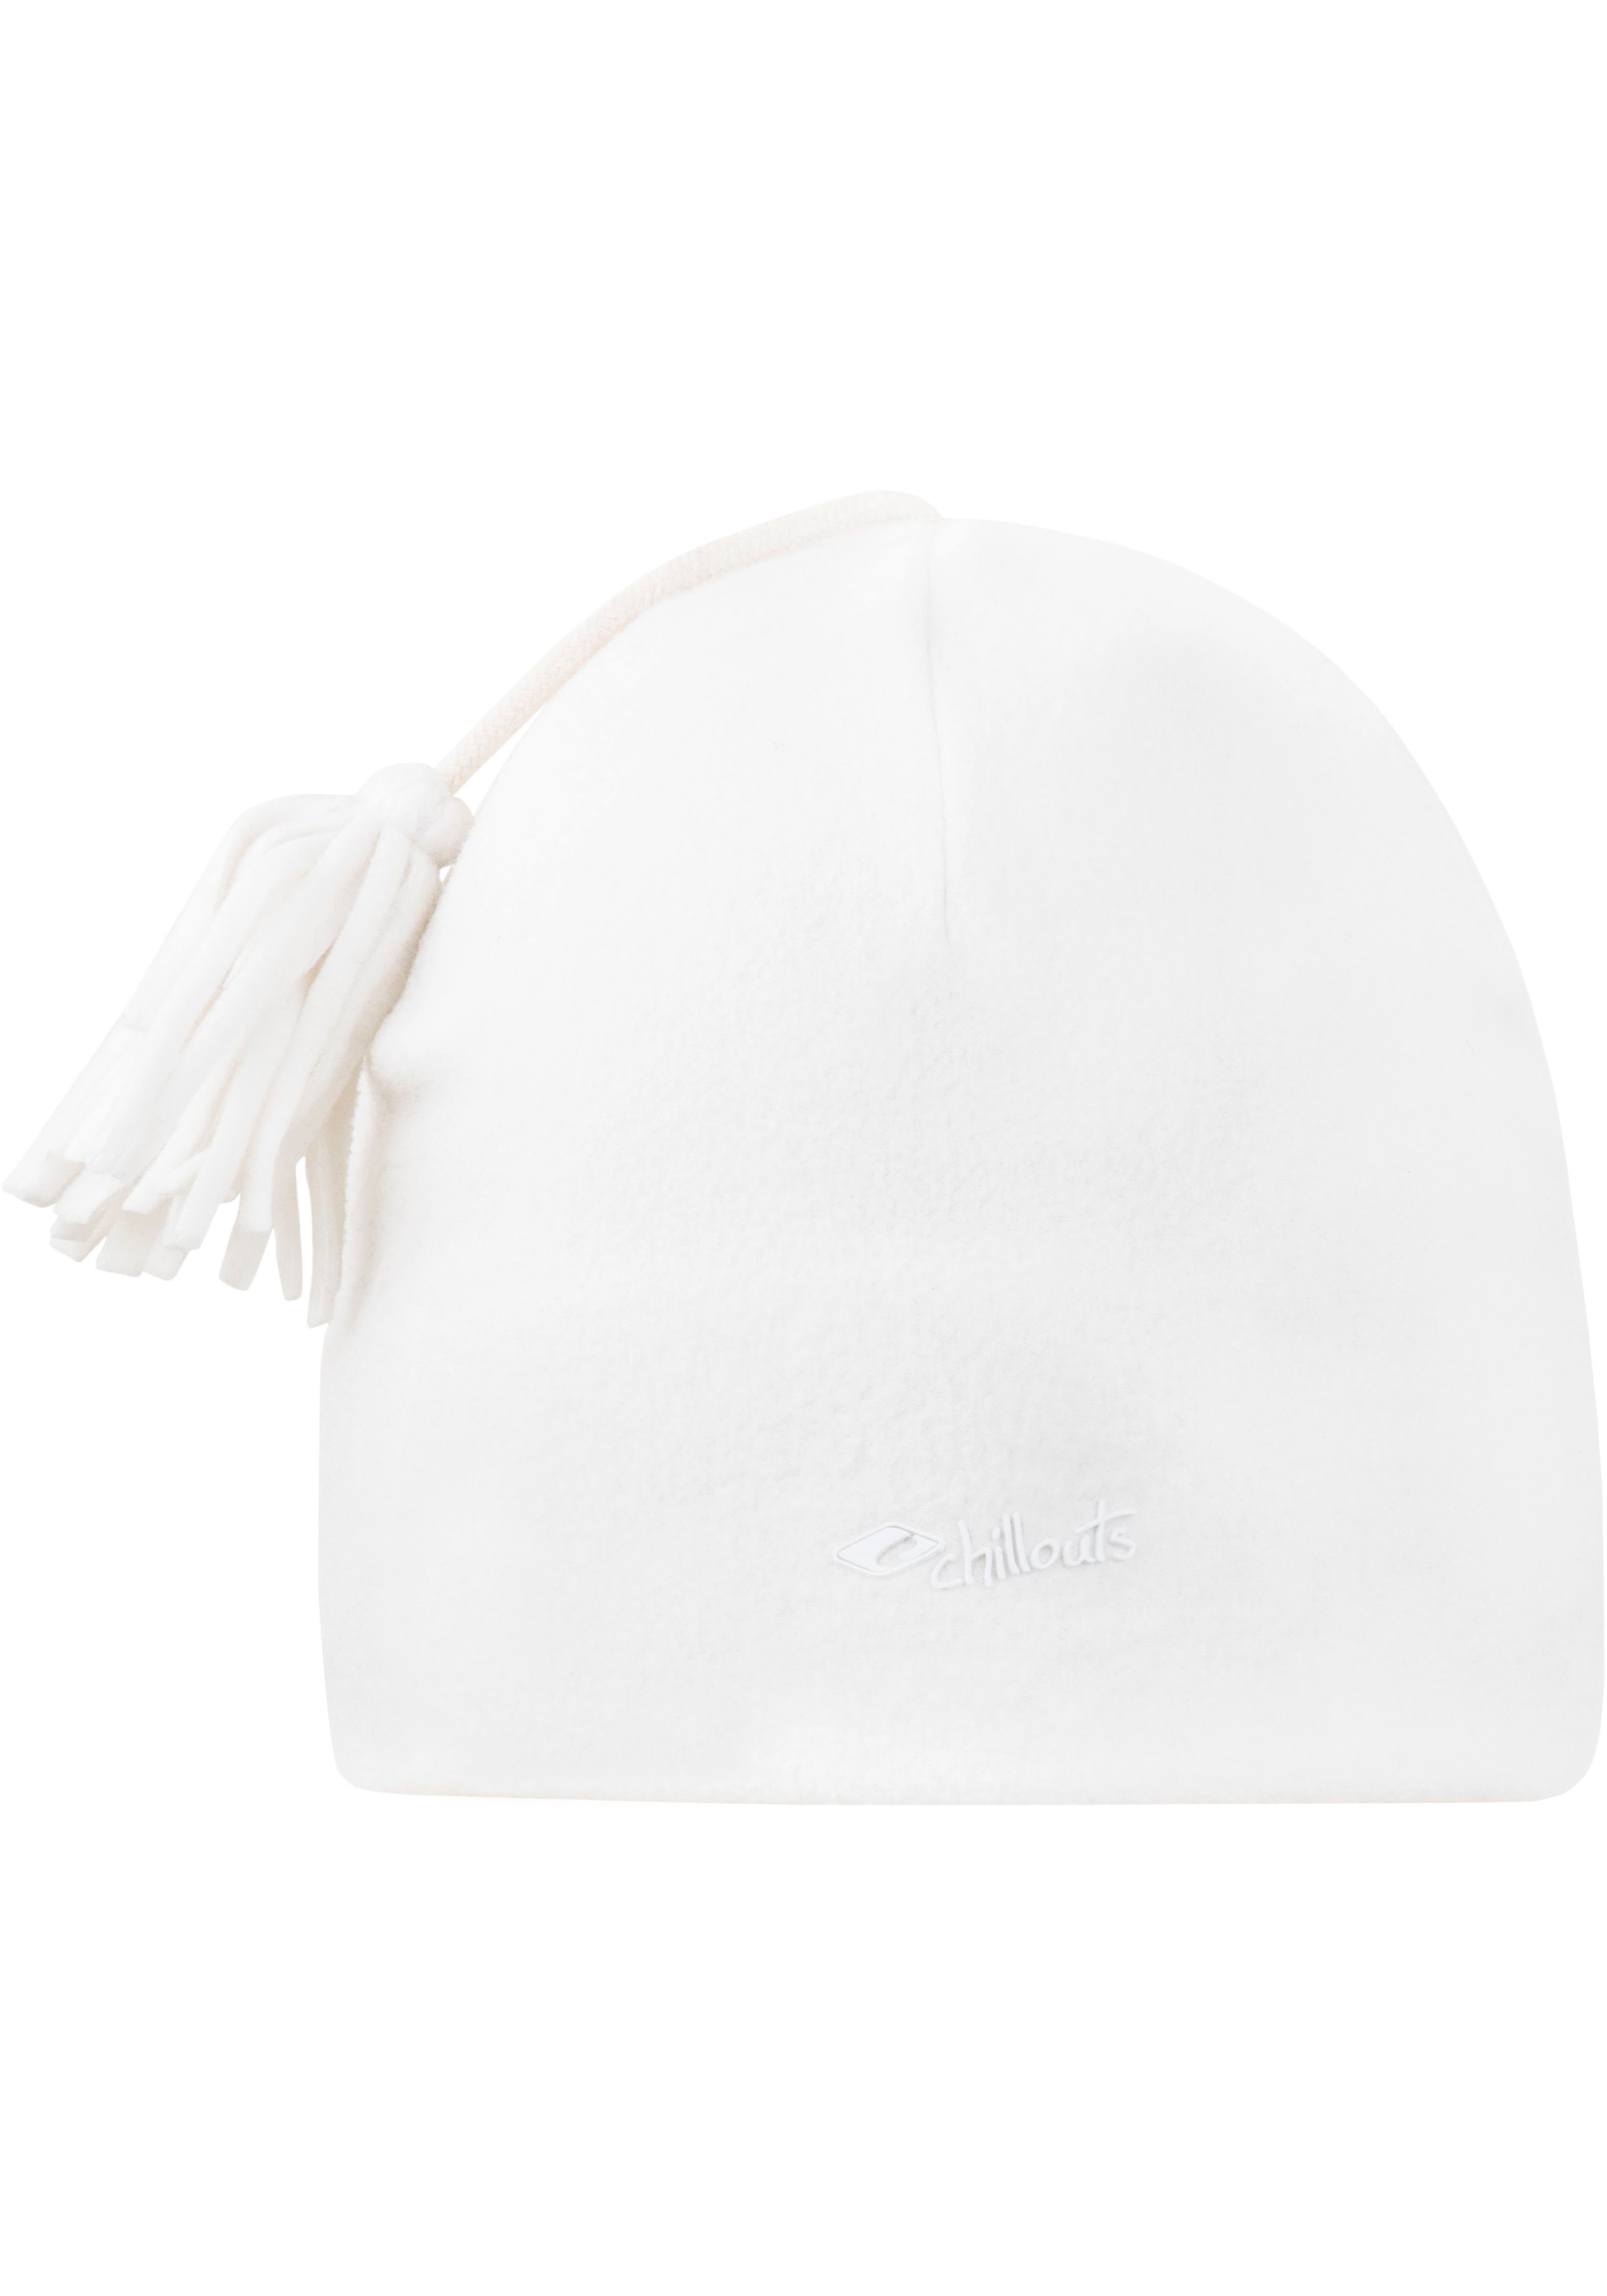 Freeze chillouts white Fleecemütze Hat Fleece Pom